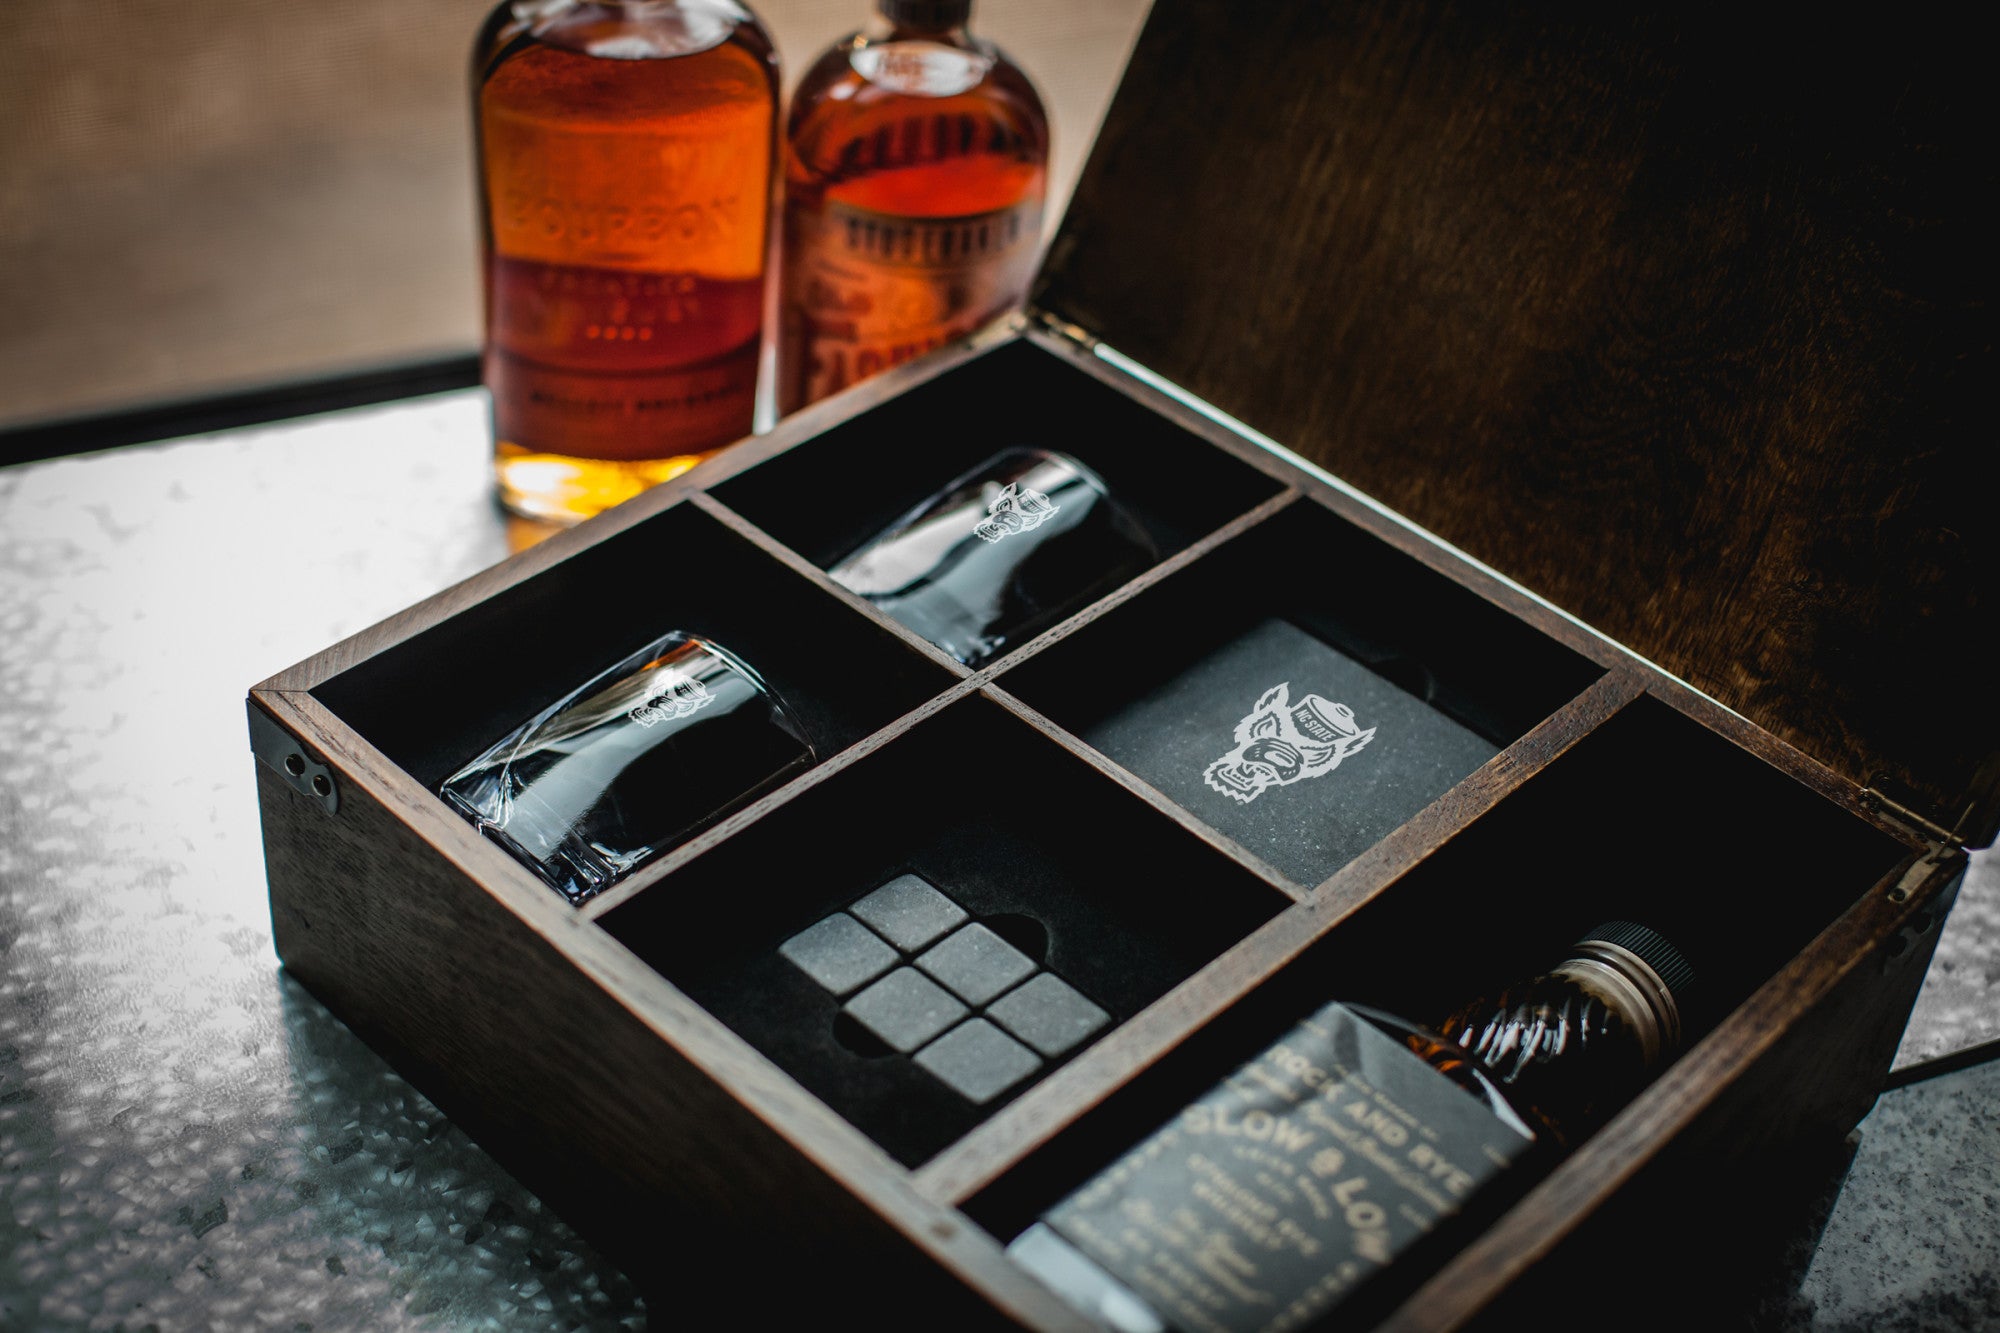 NC State Wolfpack - Whiskey Box Gift Set